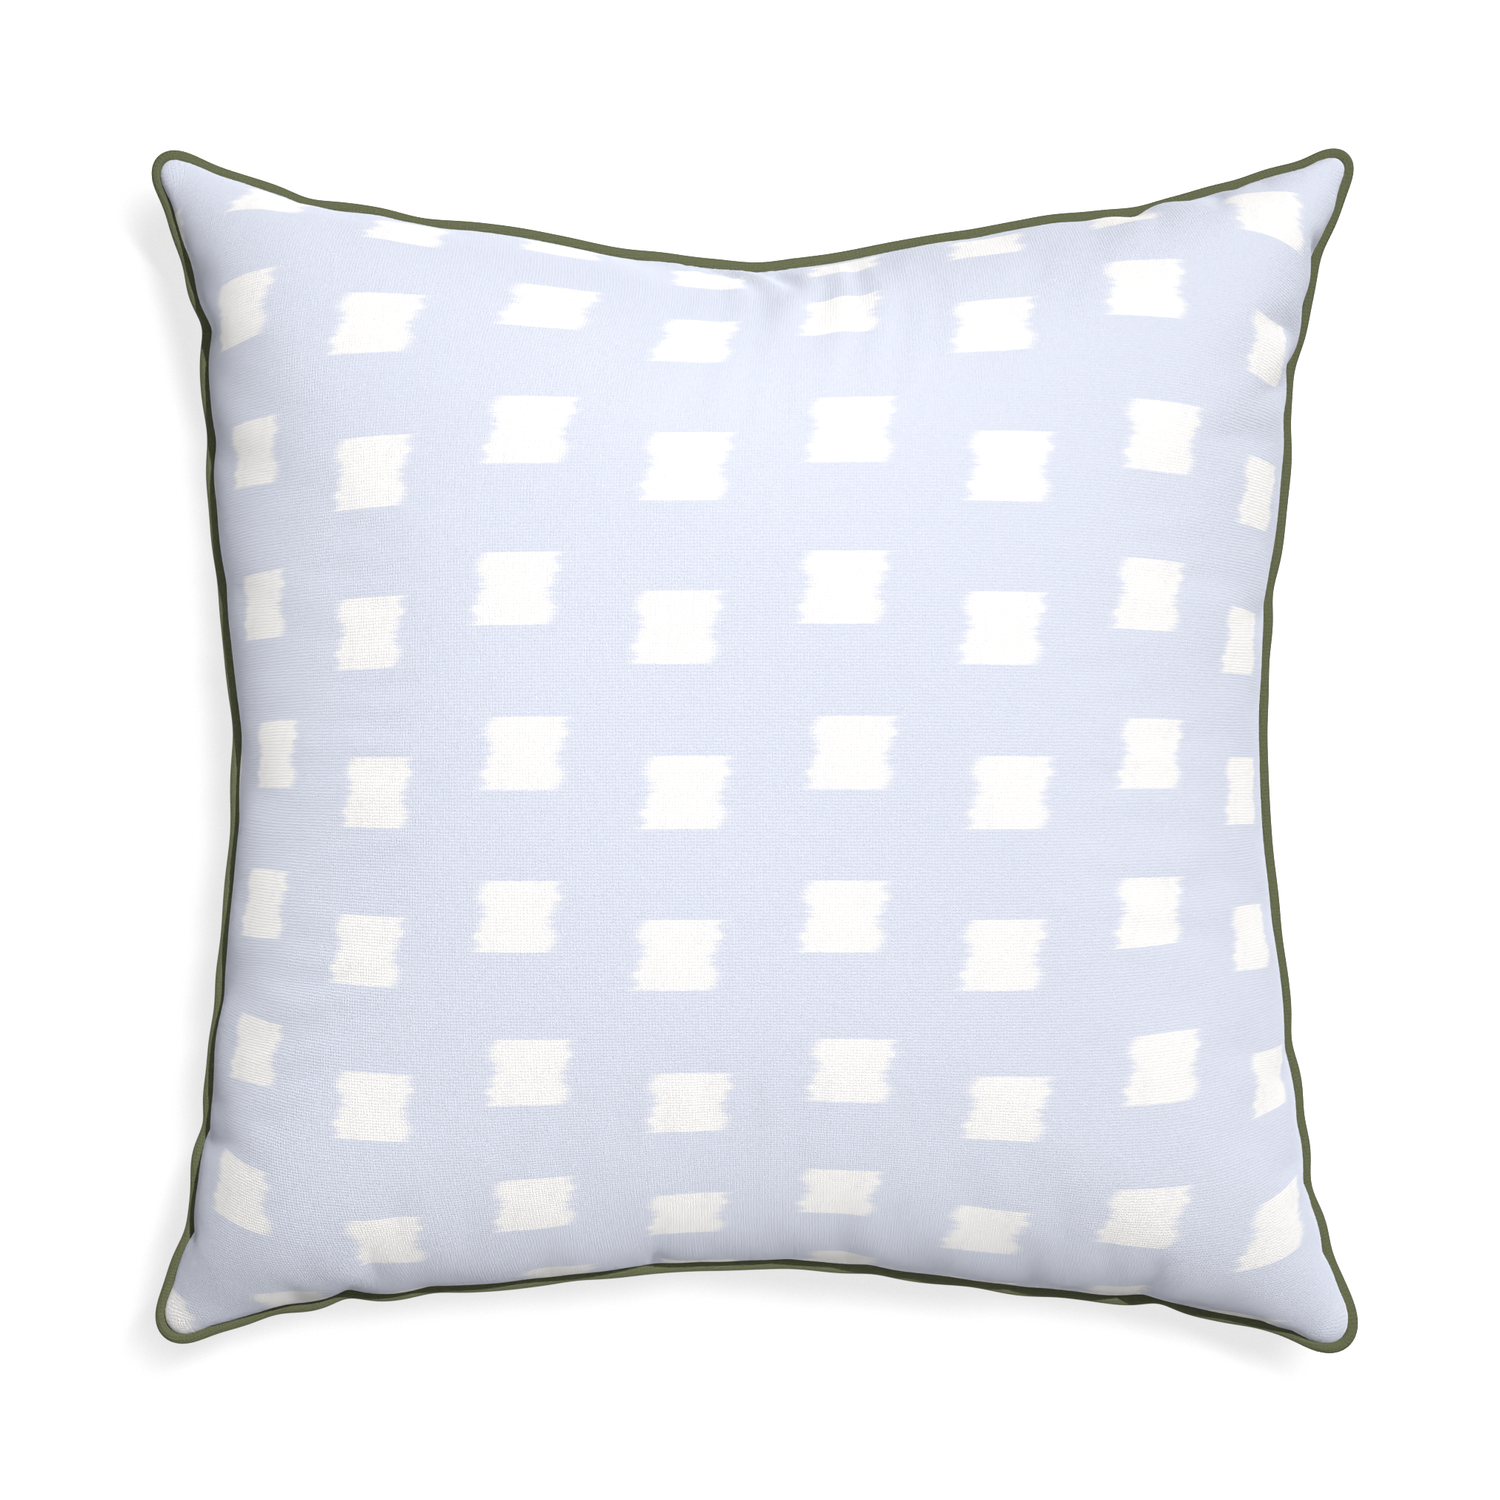 Euro-sham denton custom pillow with f piping on white background